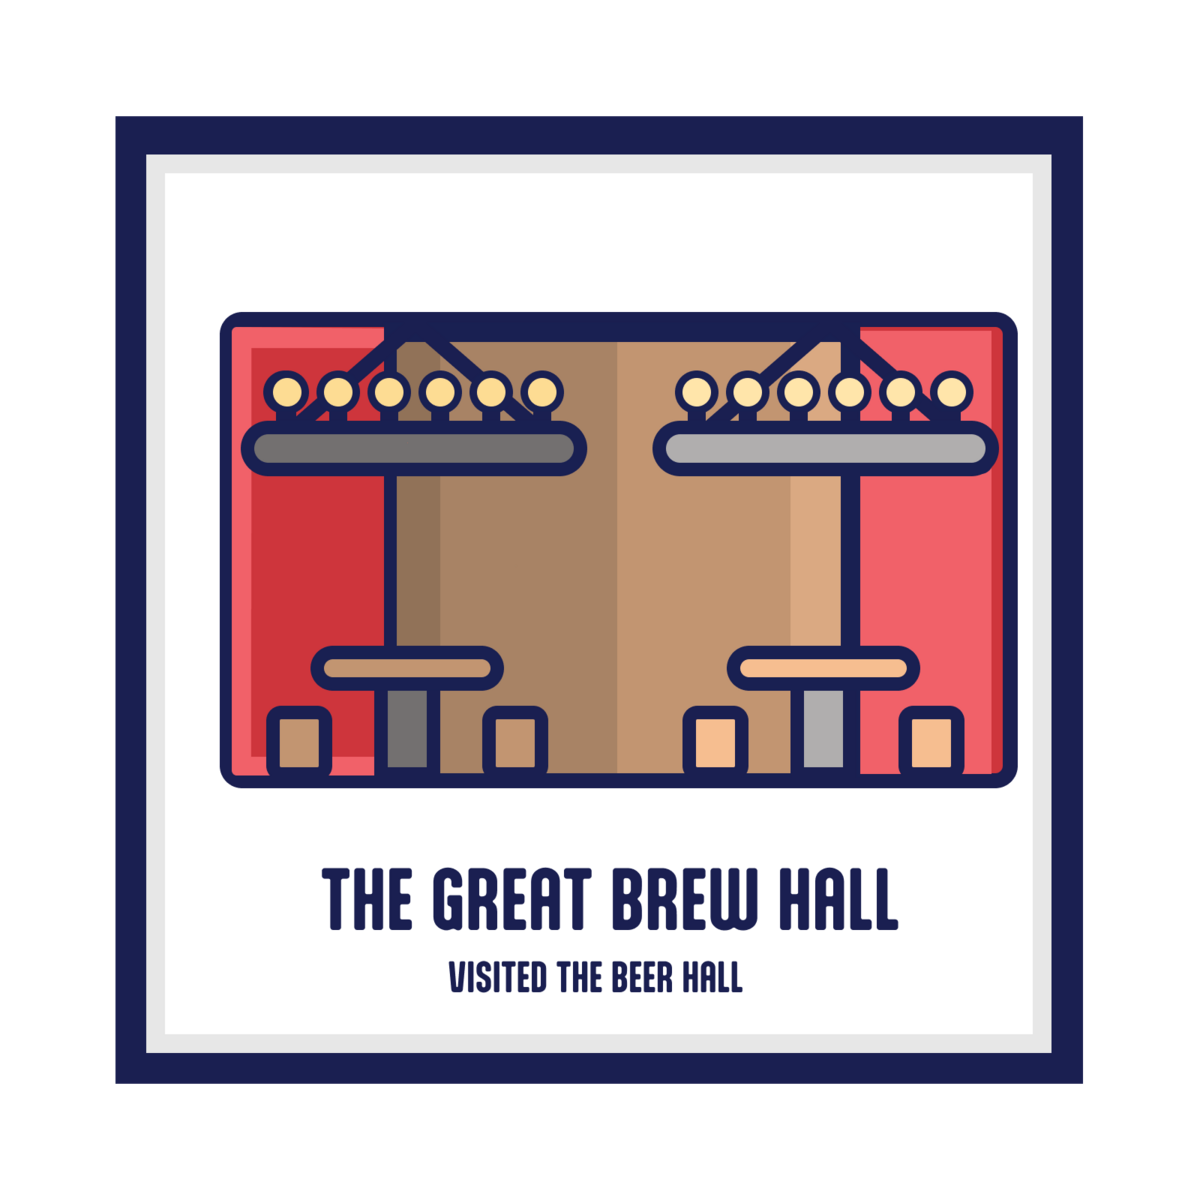 Brew hall